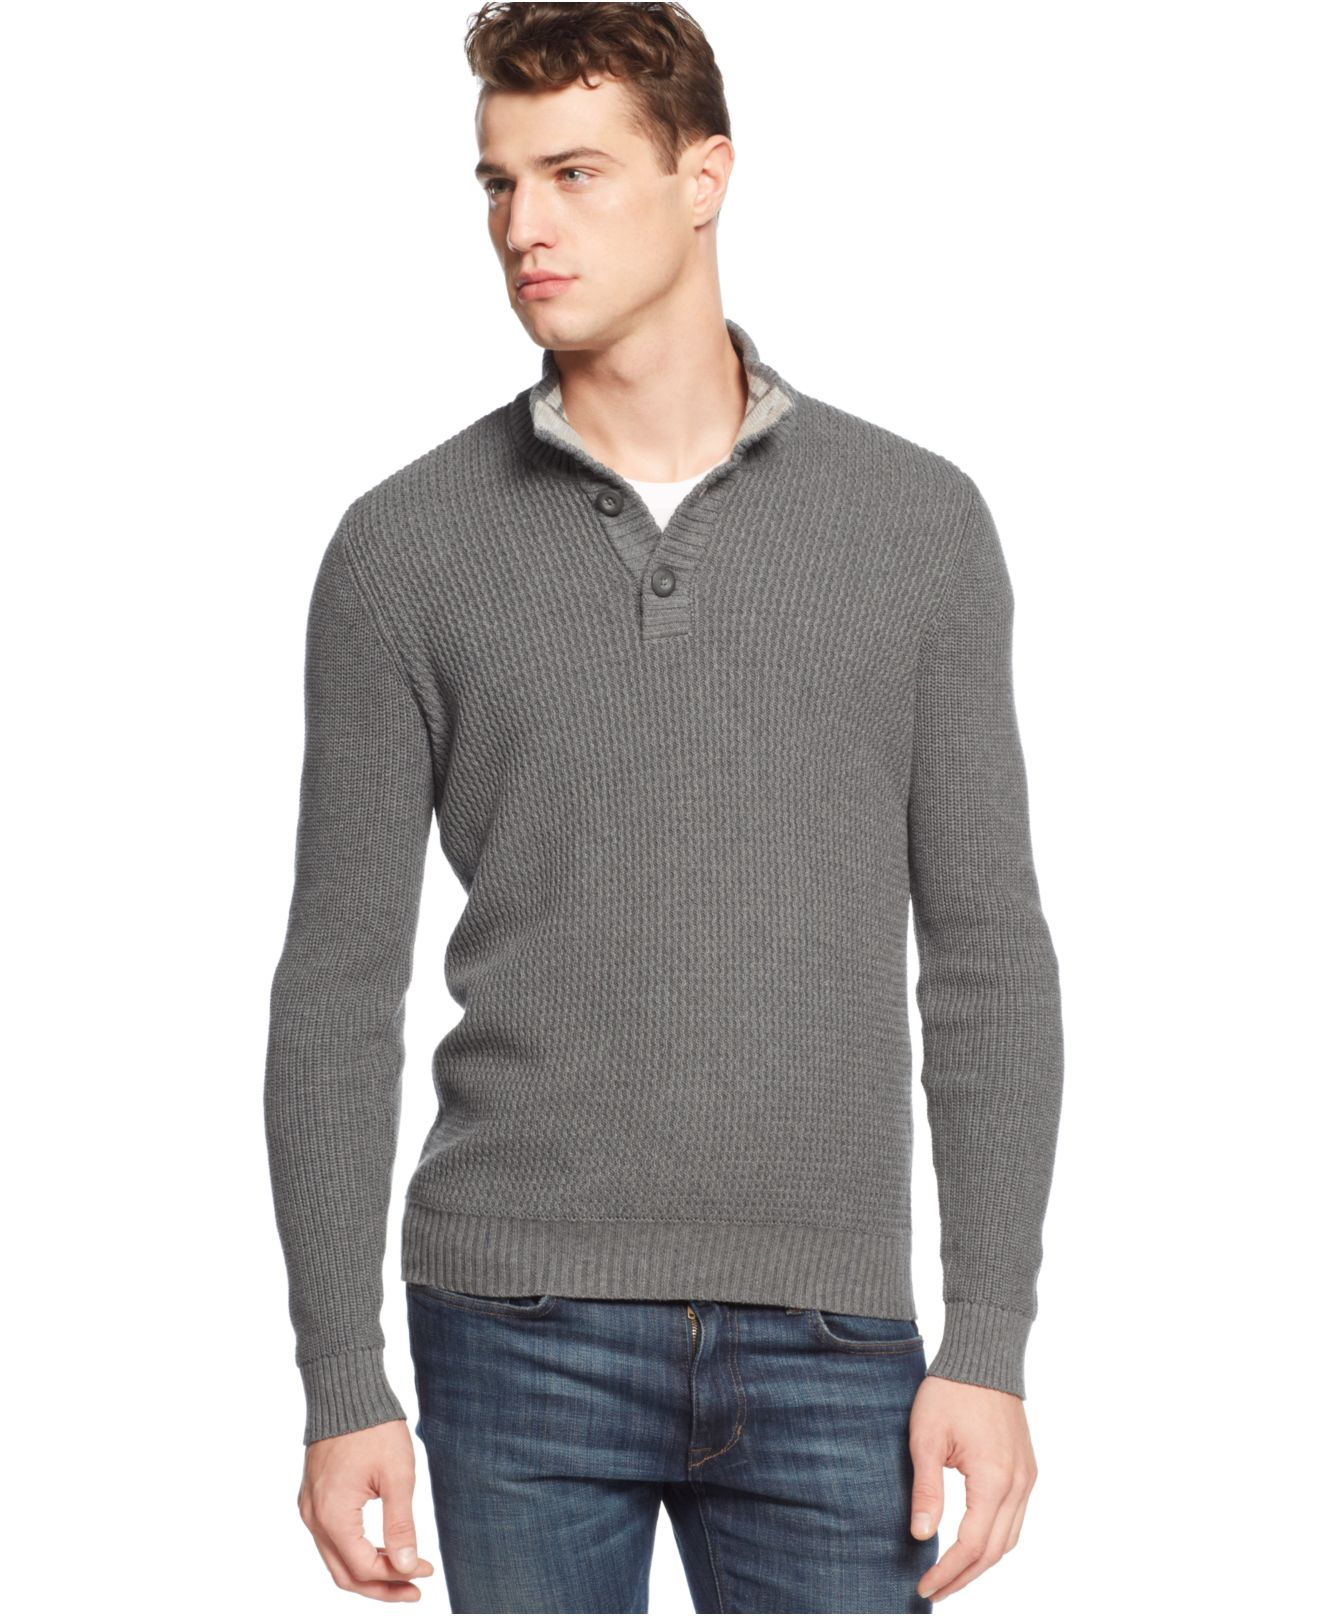 Lyst - American Rag Textured Mock-Neck Sweater in Gray for Men